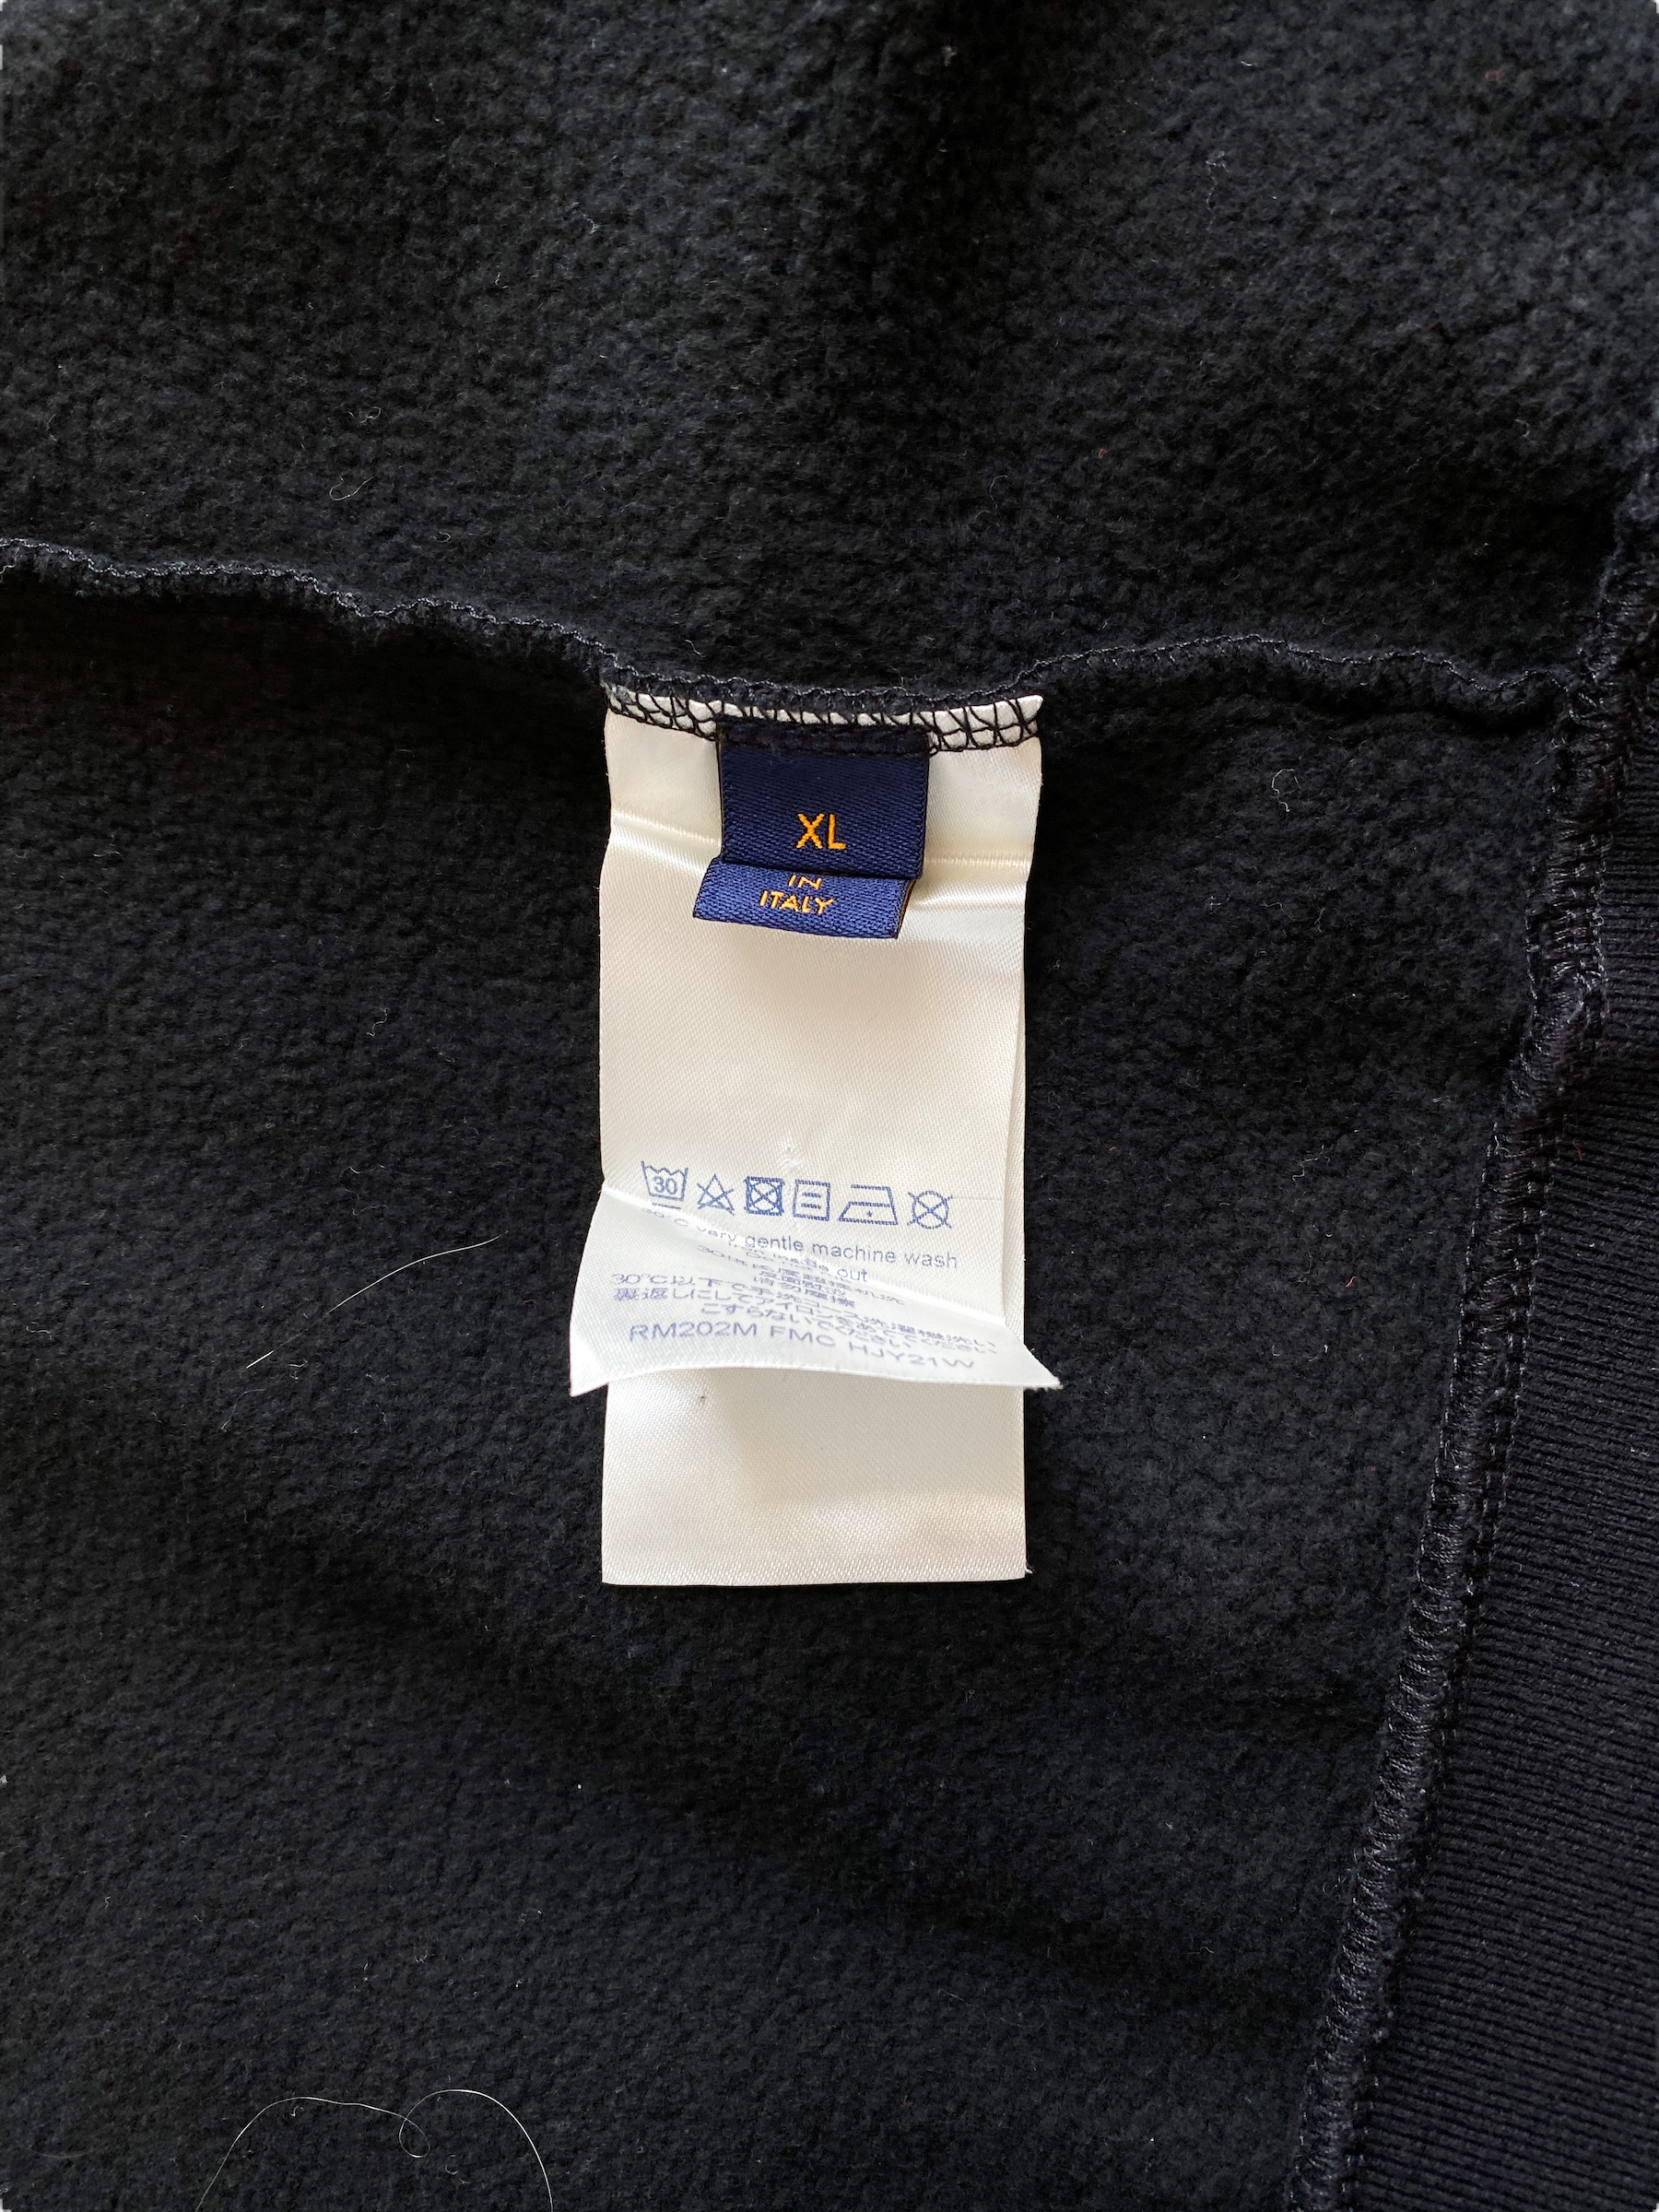 Louis Vuitton Black Rib Knit Crew Neck Sweater XL Louis Vuitton